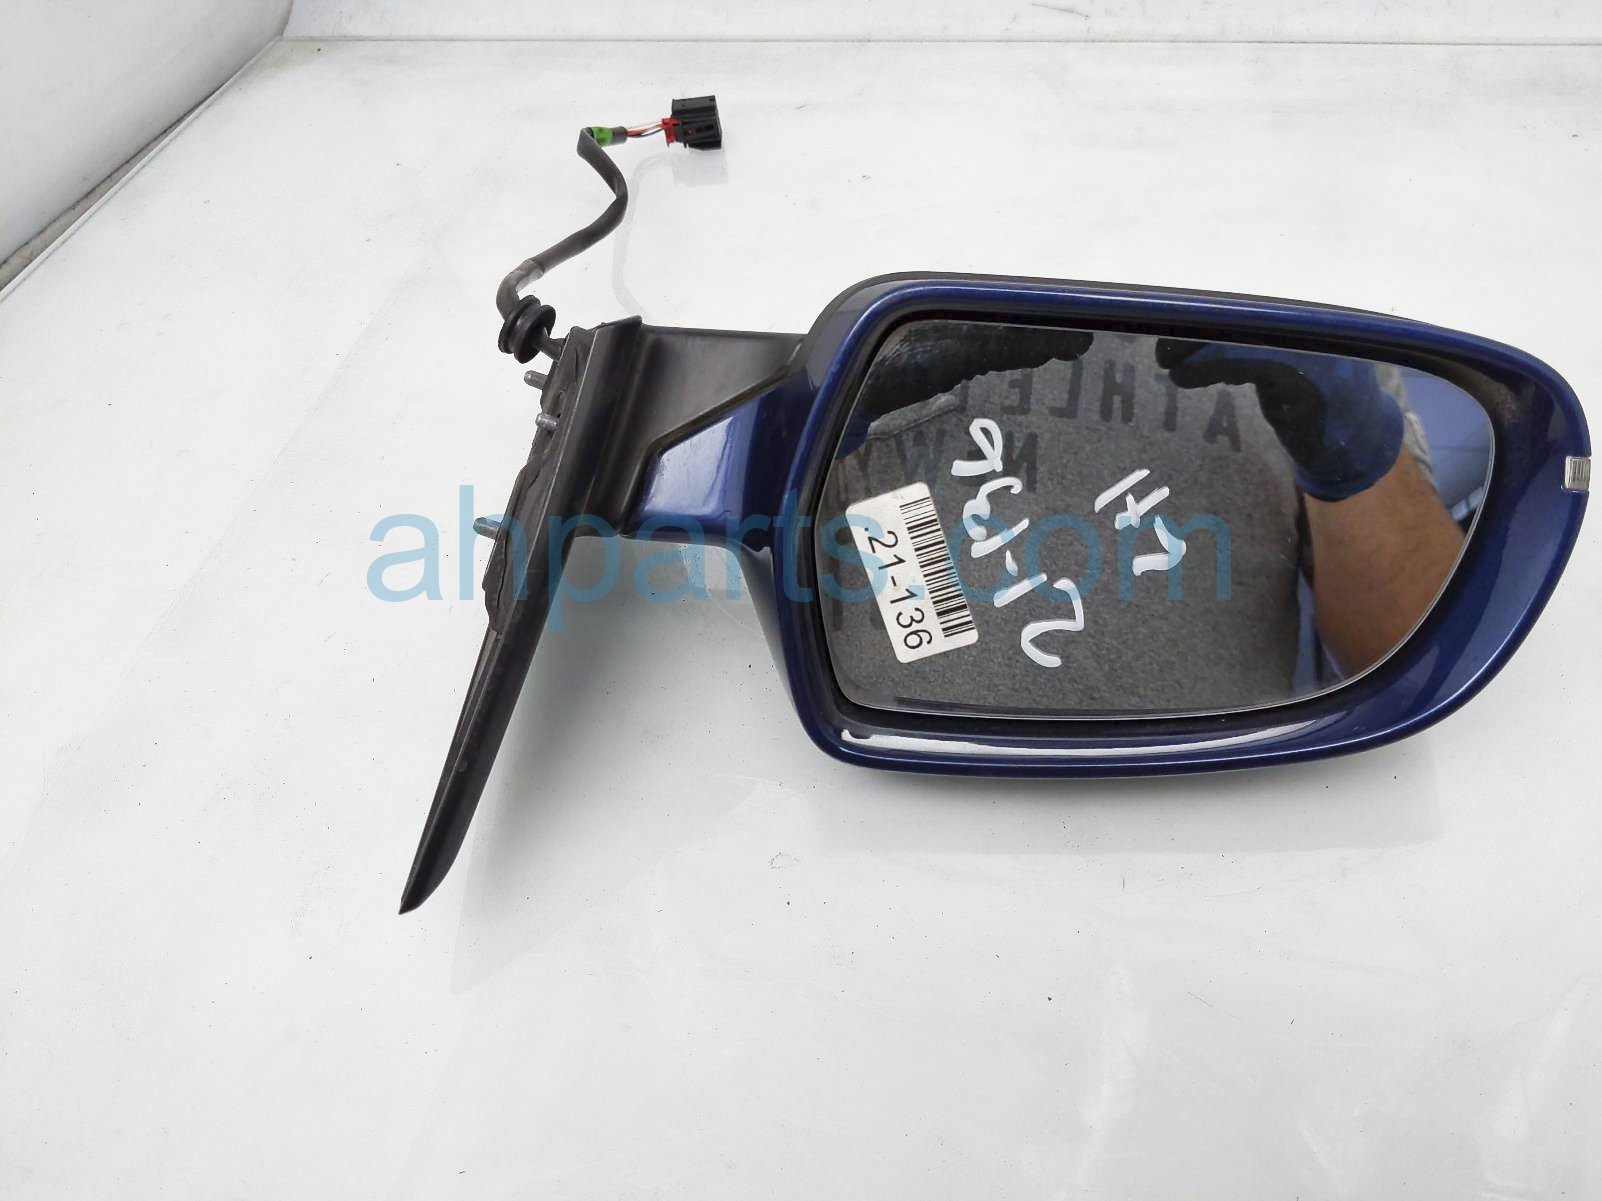 $125 Audi LH SIDE VIEW MIRROR - BLUE